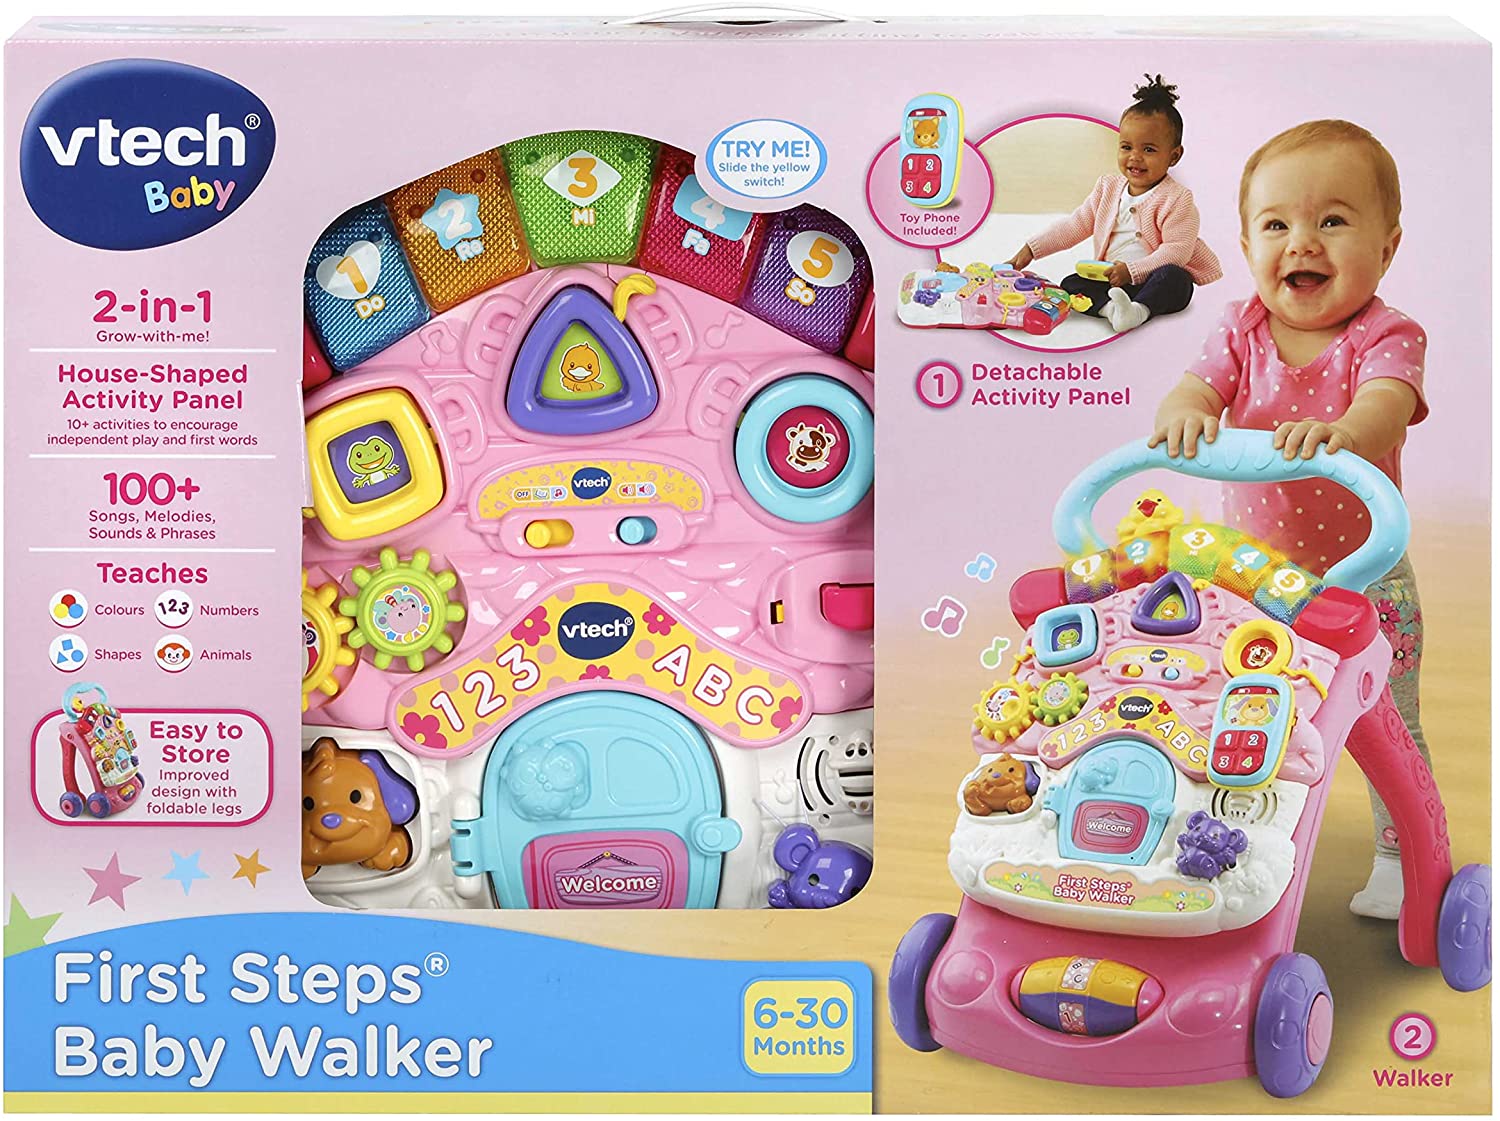 Vtech First Steps Baby Walker Pink